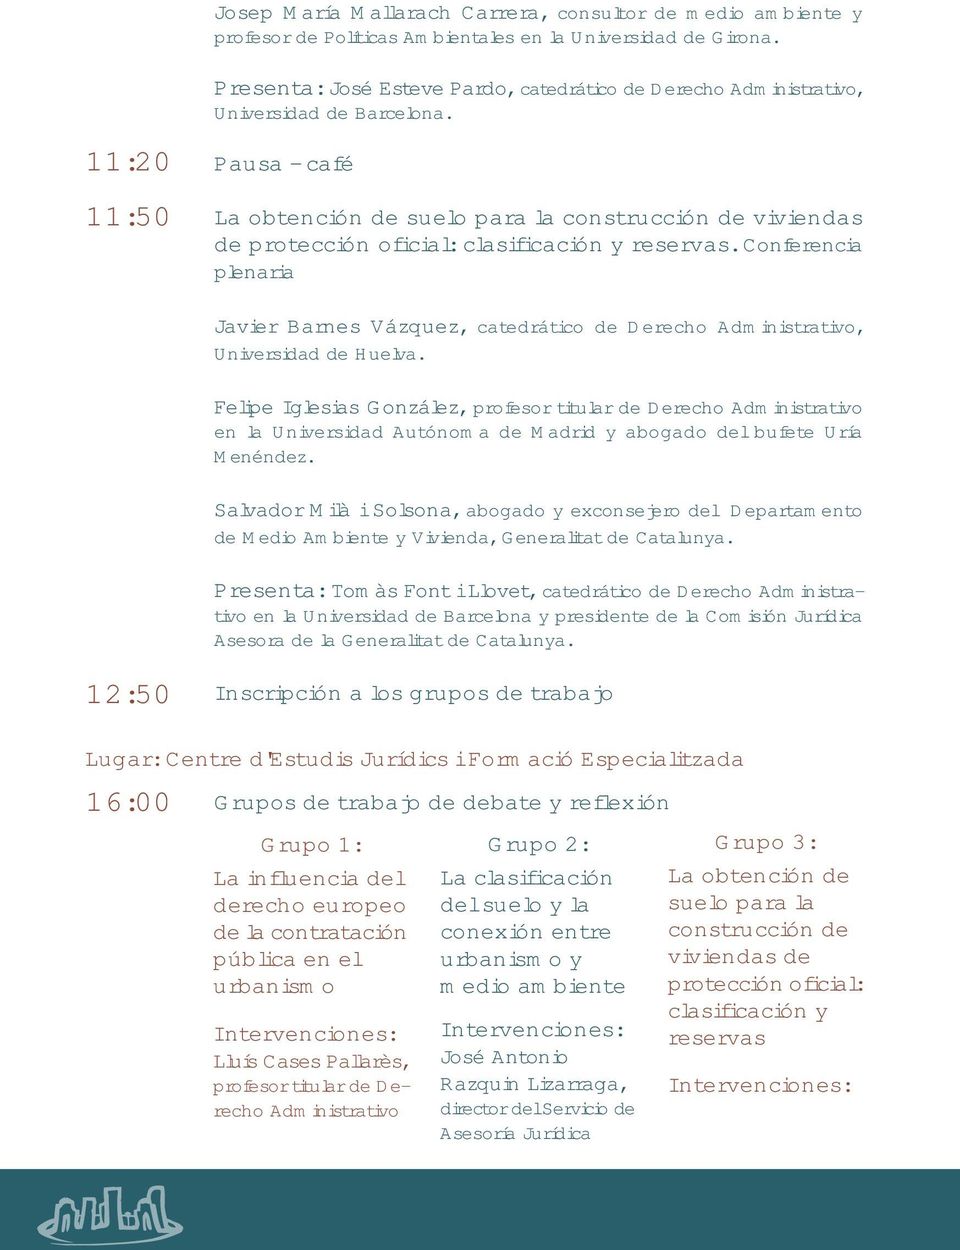 Conferencia plenaria Javier Barnes Vázquez, catedrático de Derecho Administrativo, Huelva.